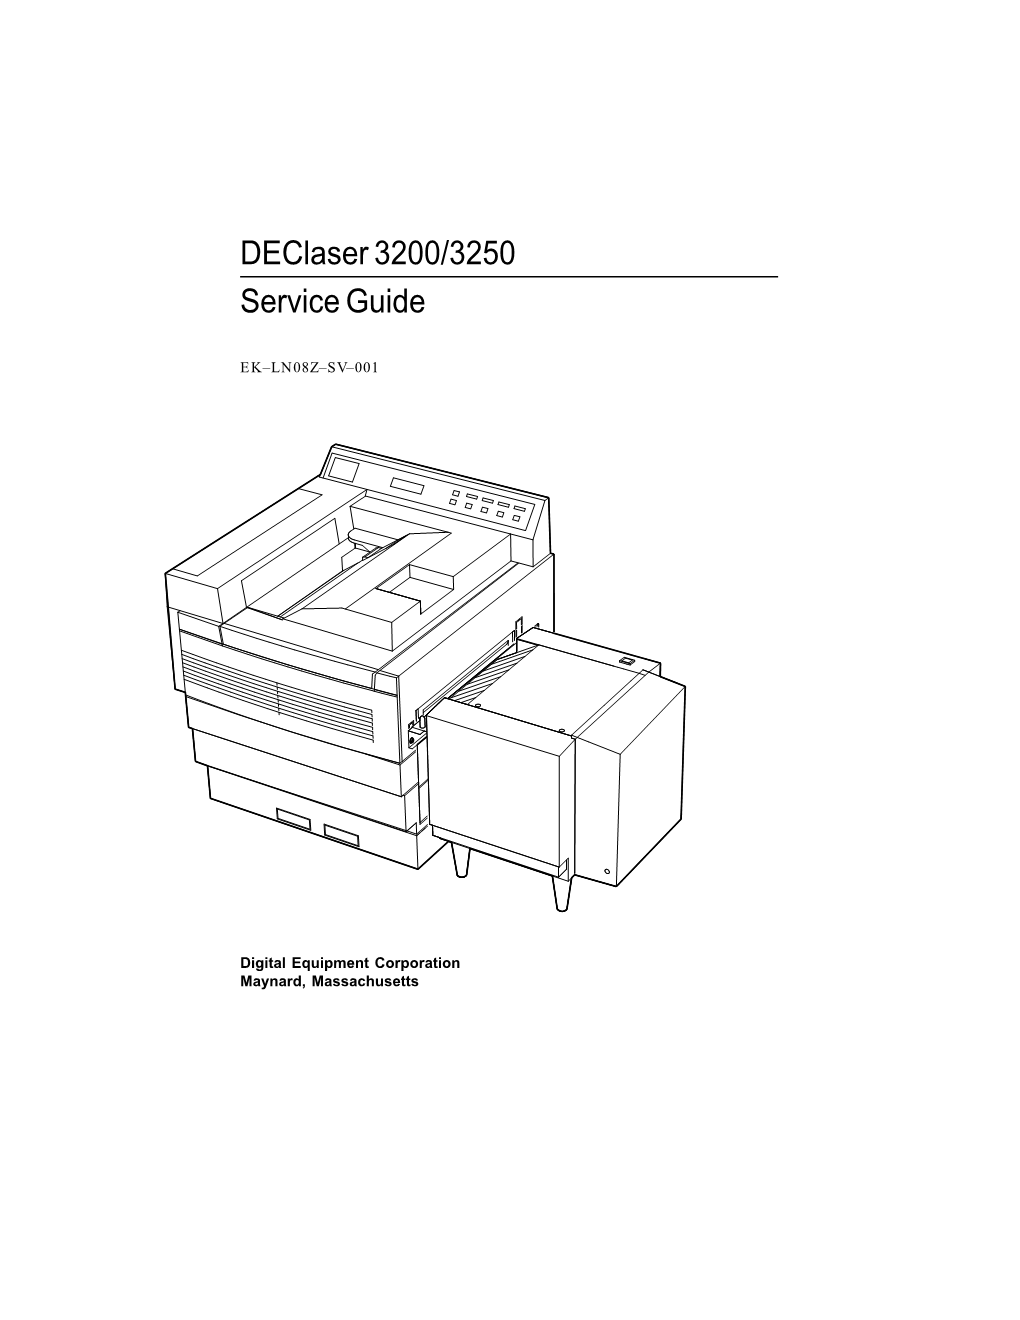 Declaser 3200/3250 Service Guide